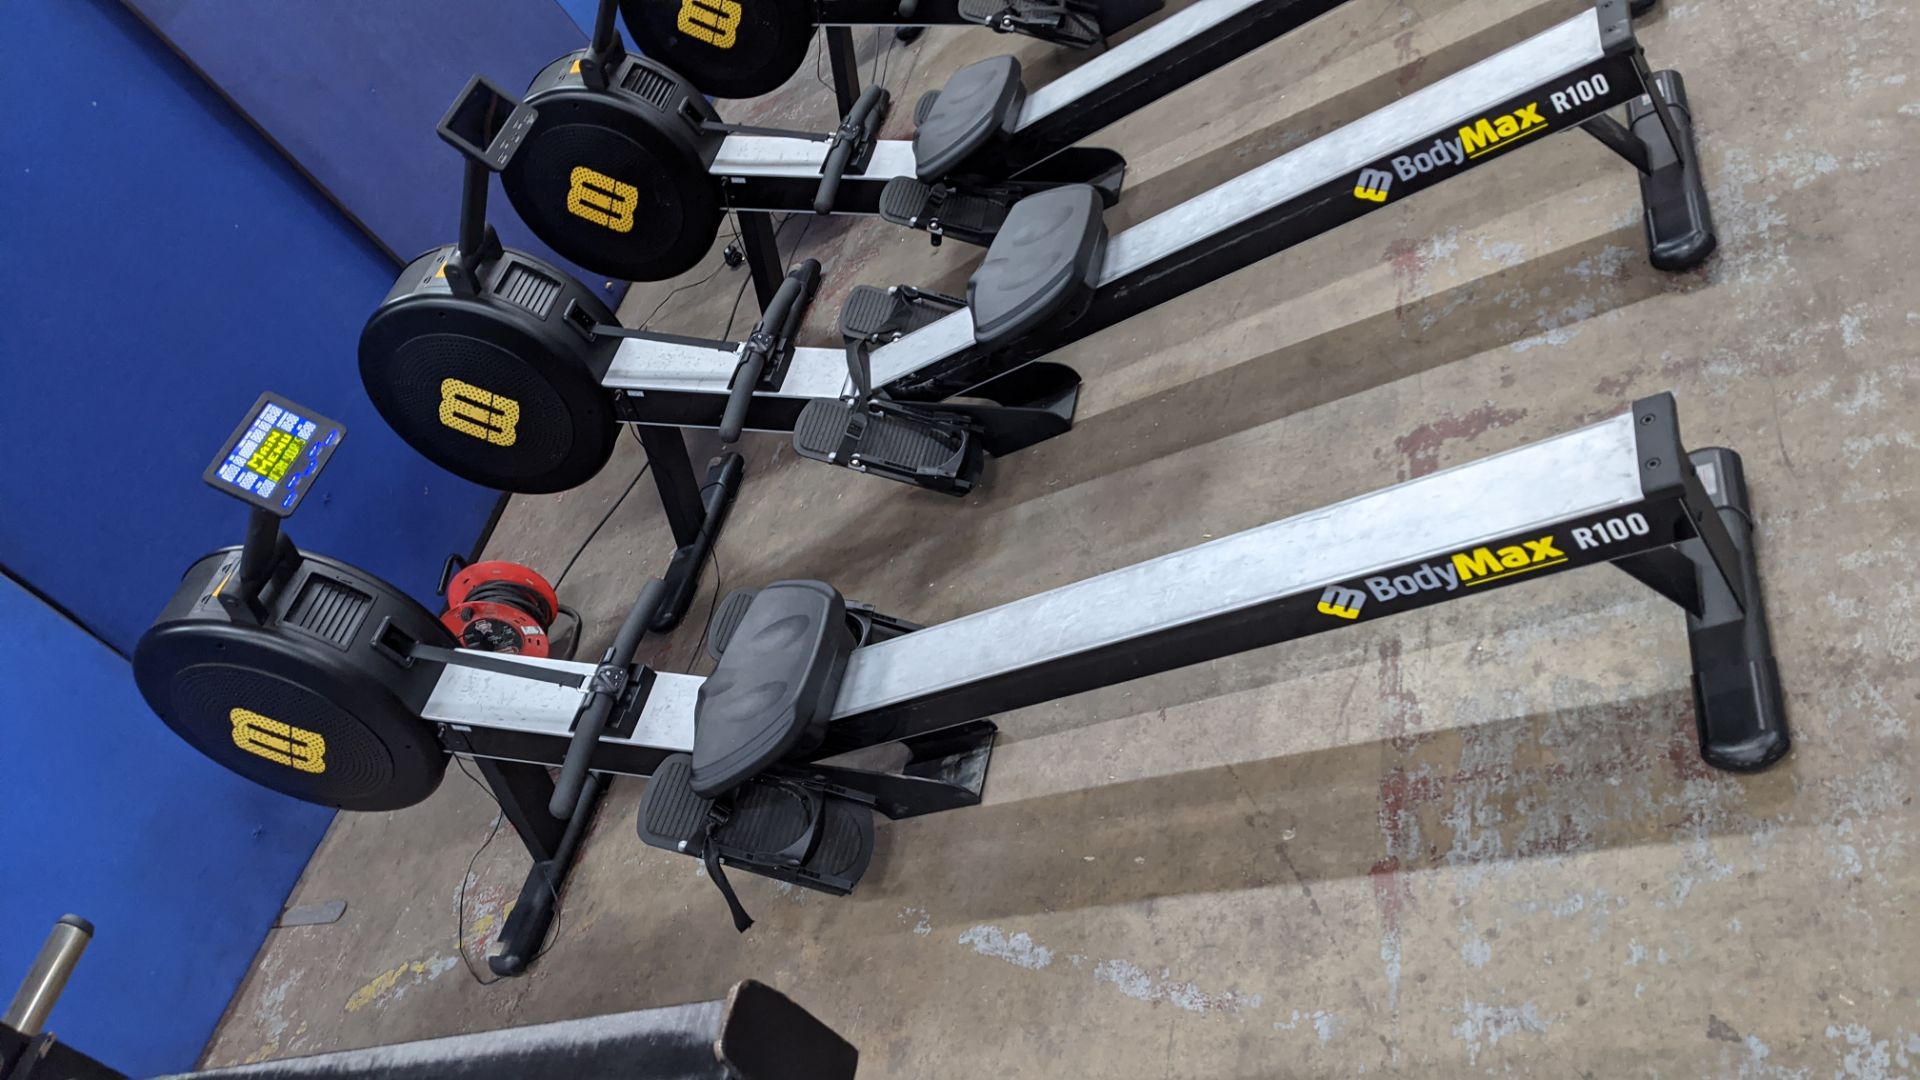 BodyMax R100 rowing machine - Image 3 of 14